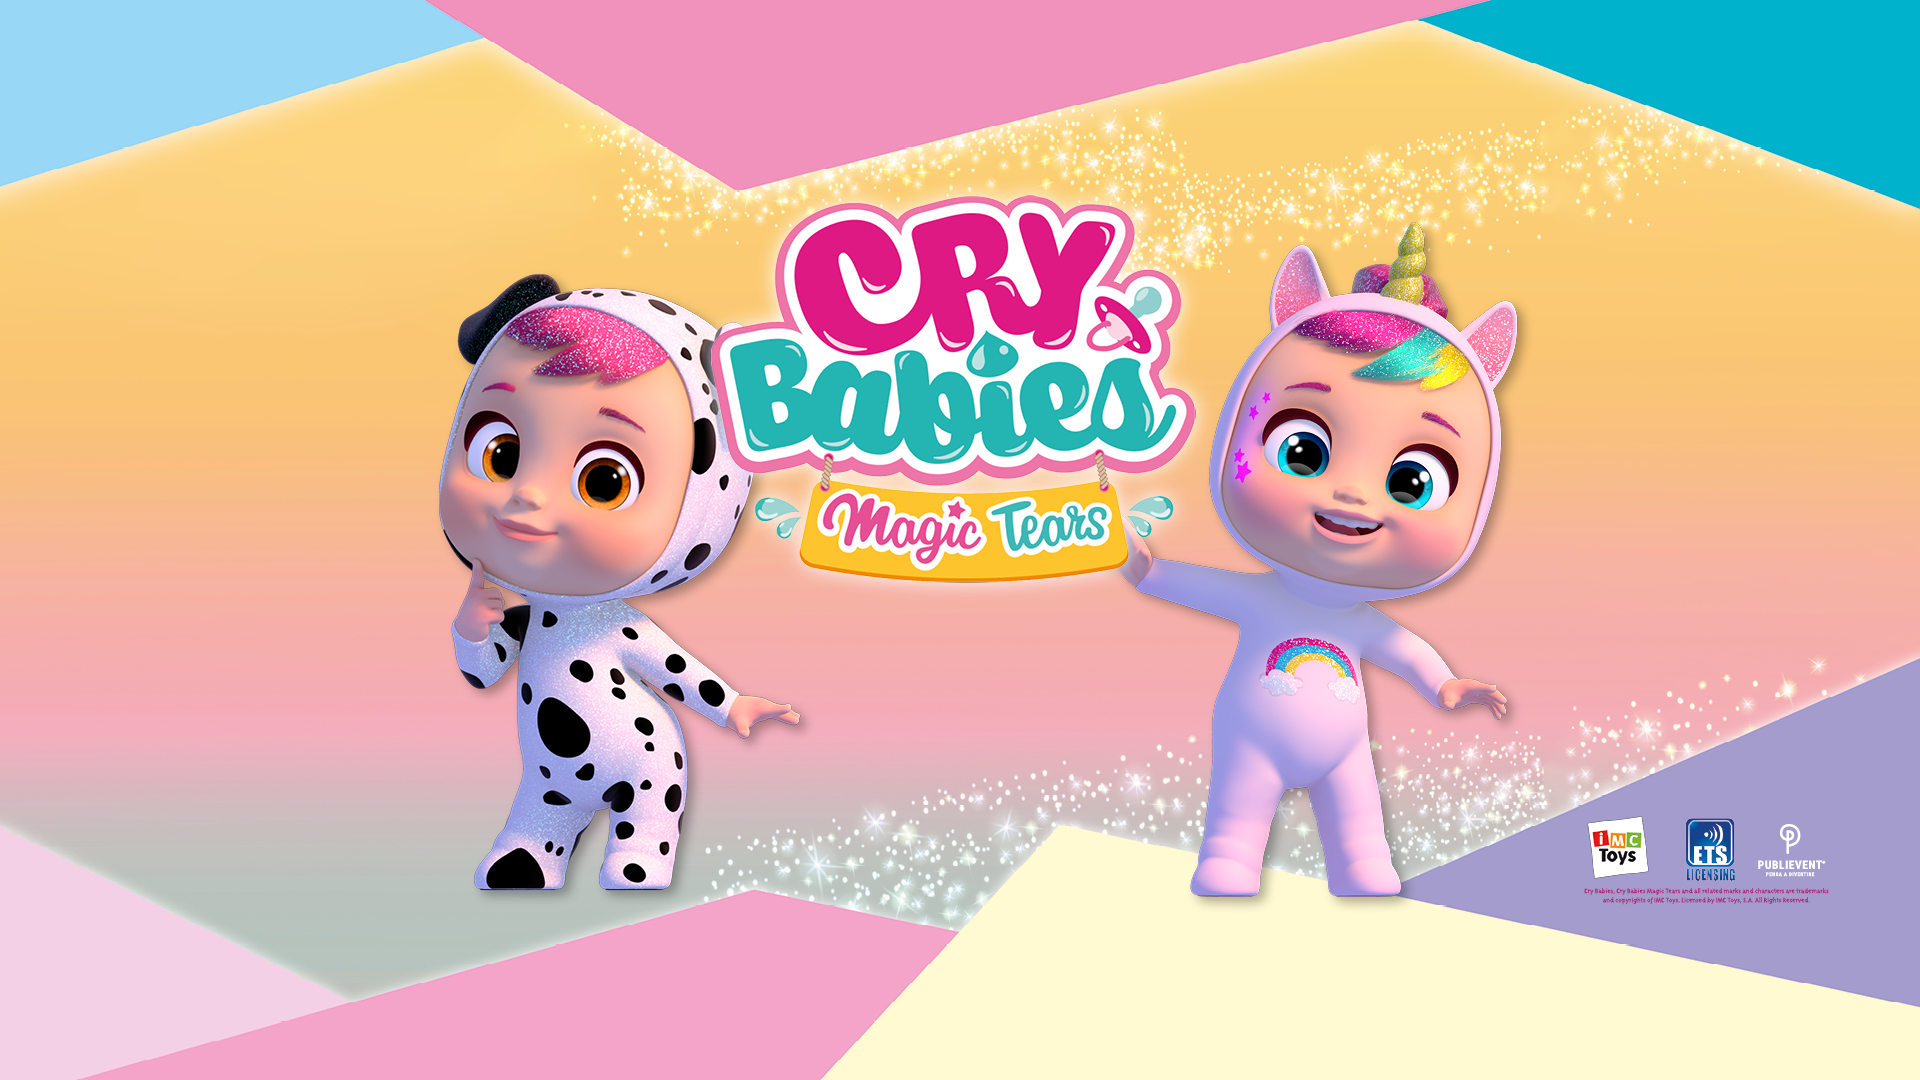 Da venerdì 8 a domenica 10 marzo: evento Cry Babies Magic Tears!